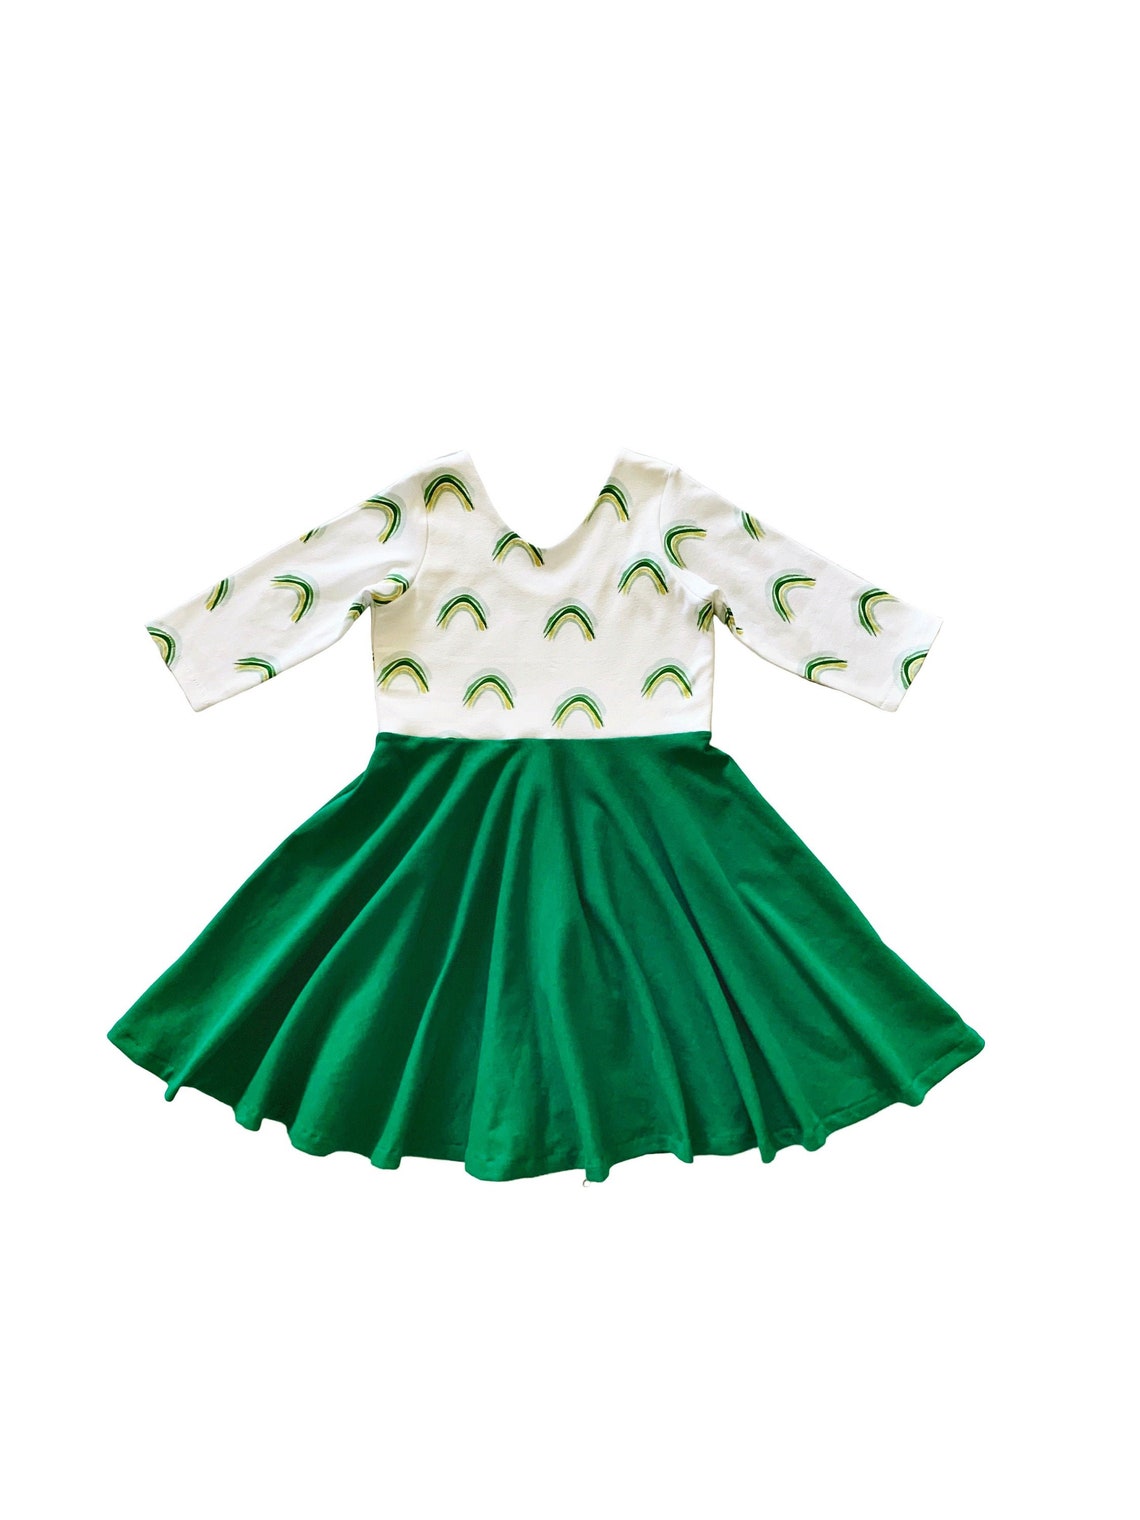 Rainbow Twirl Dress St Patrick's Day Dress Green Twirl | Etsy